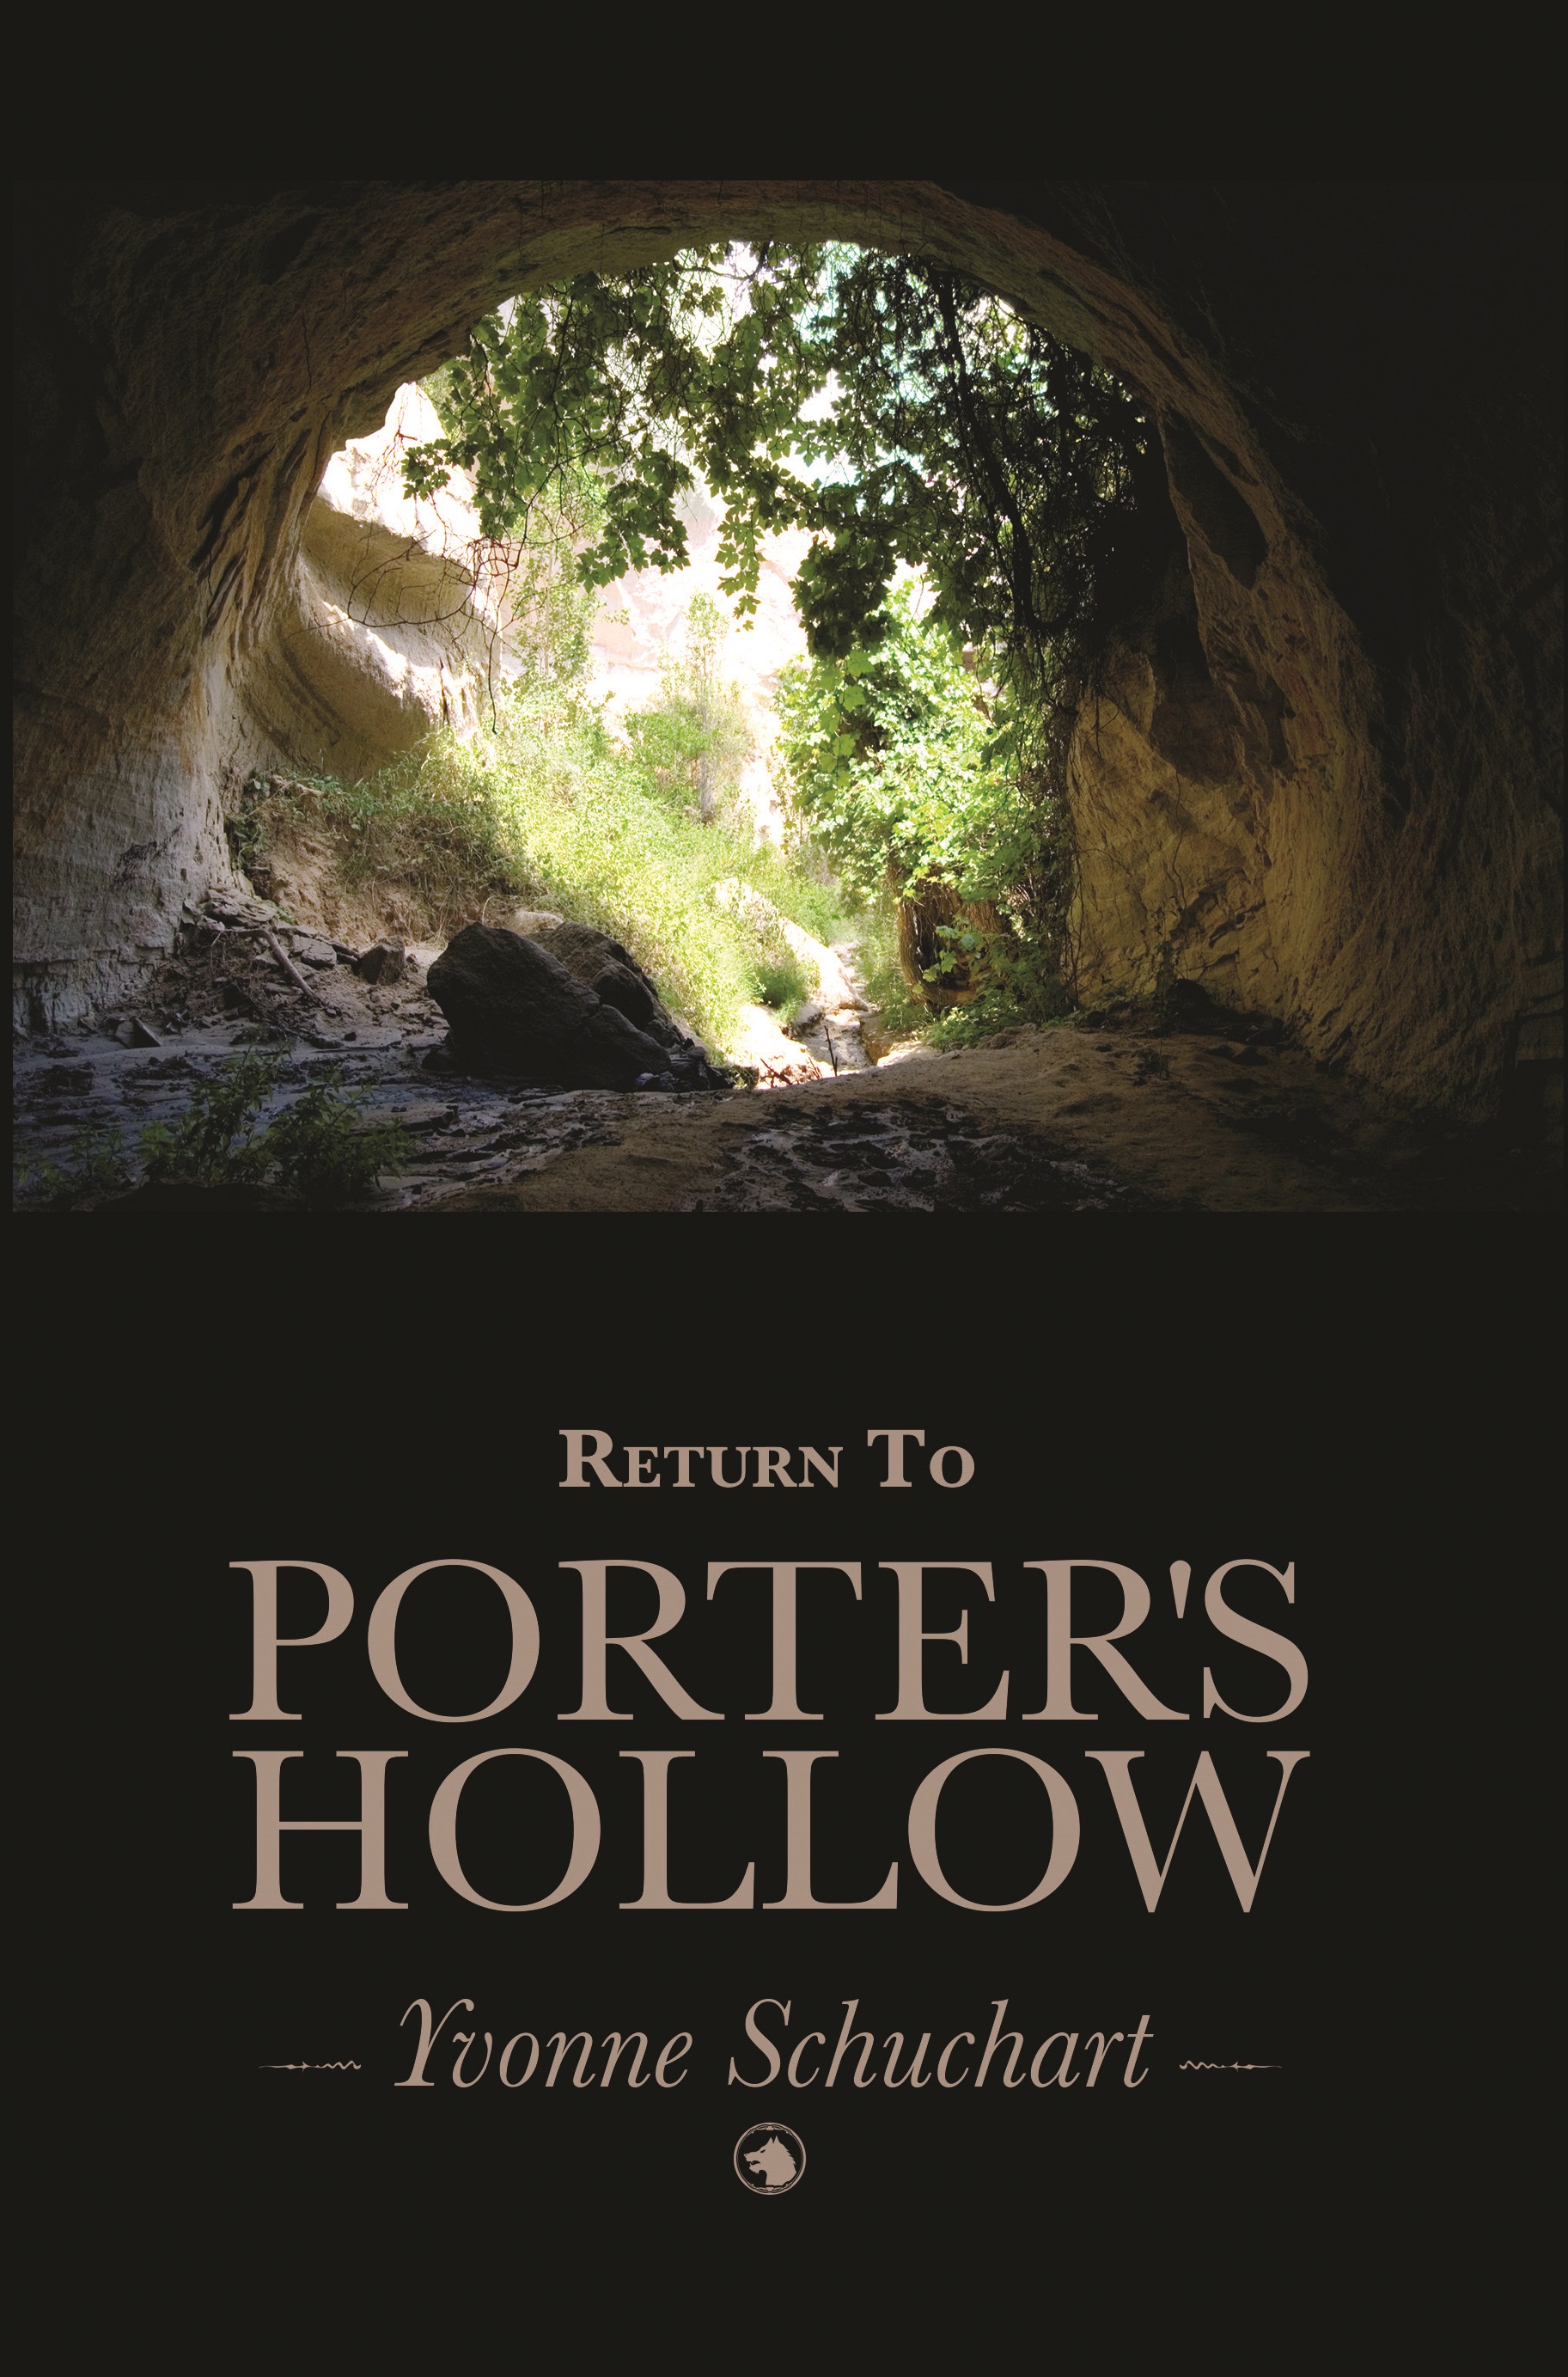 Return to Porter's Hollow by Yvonne Schuchart